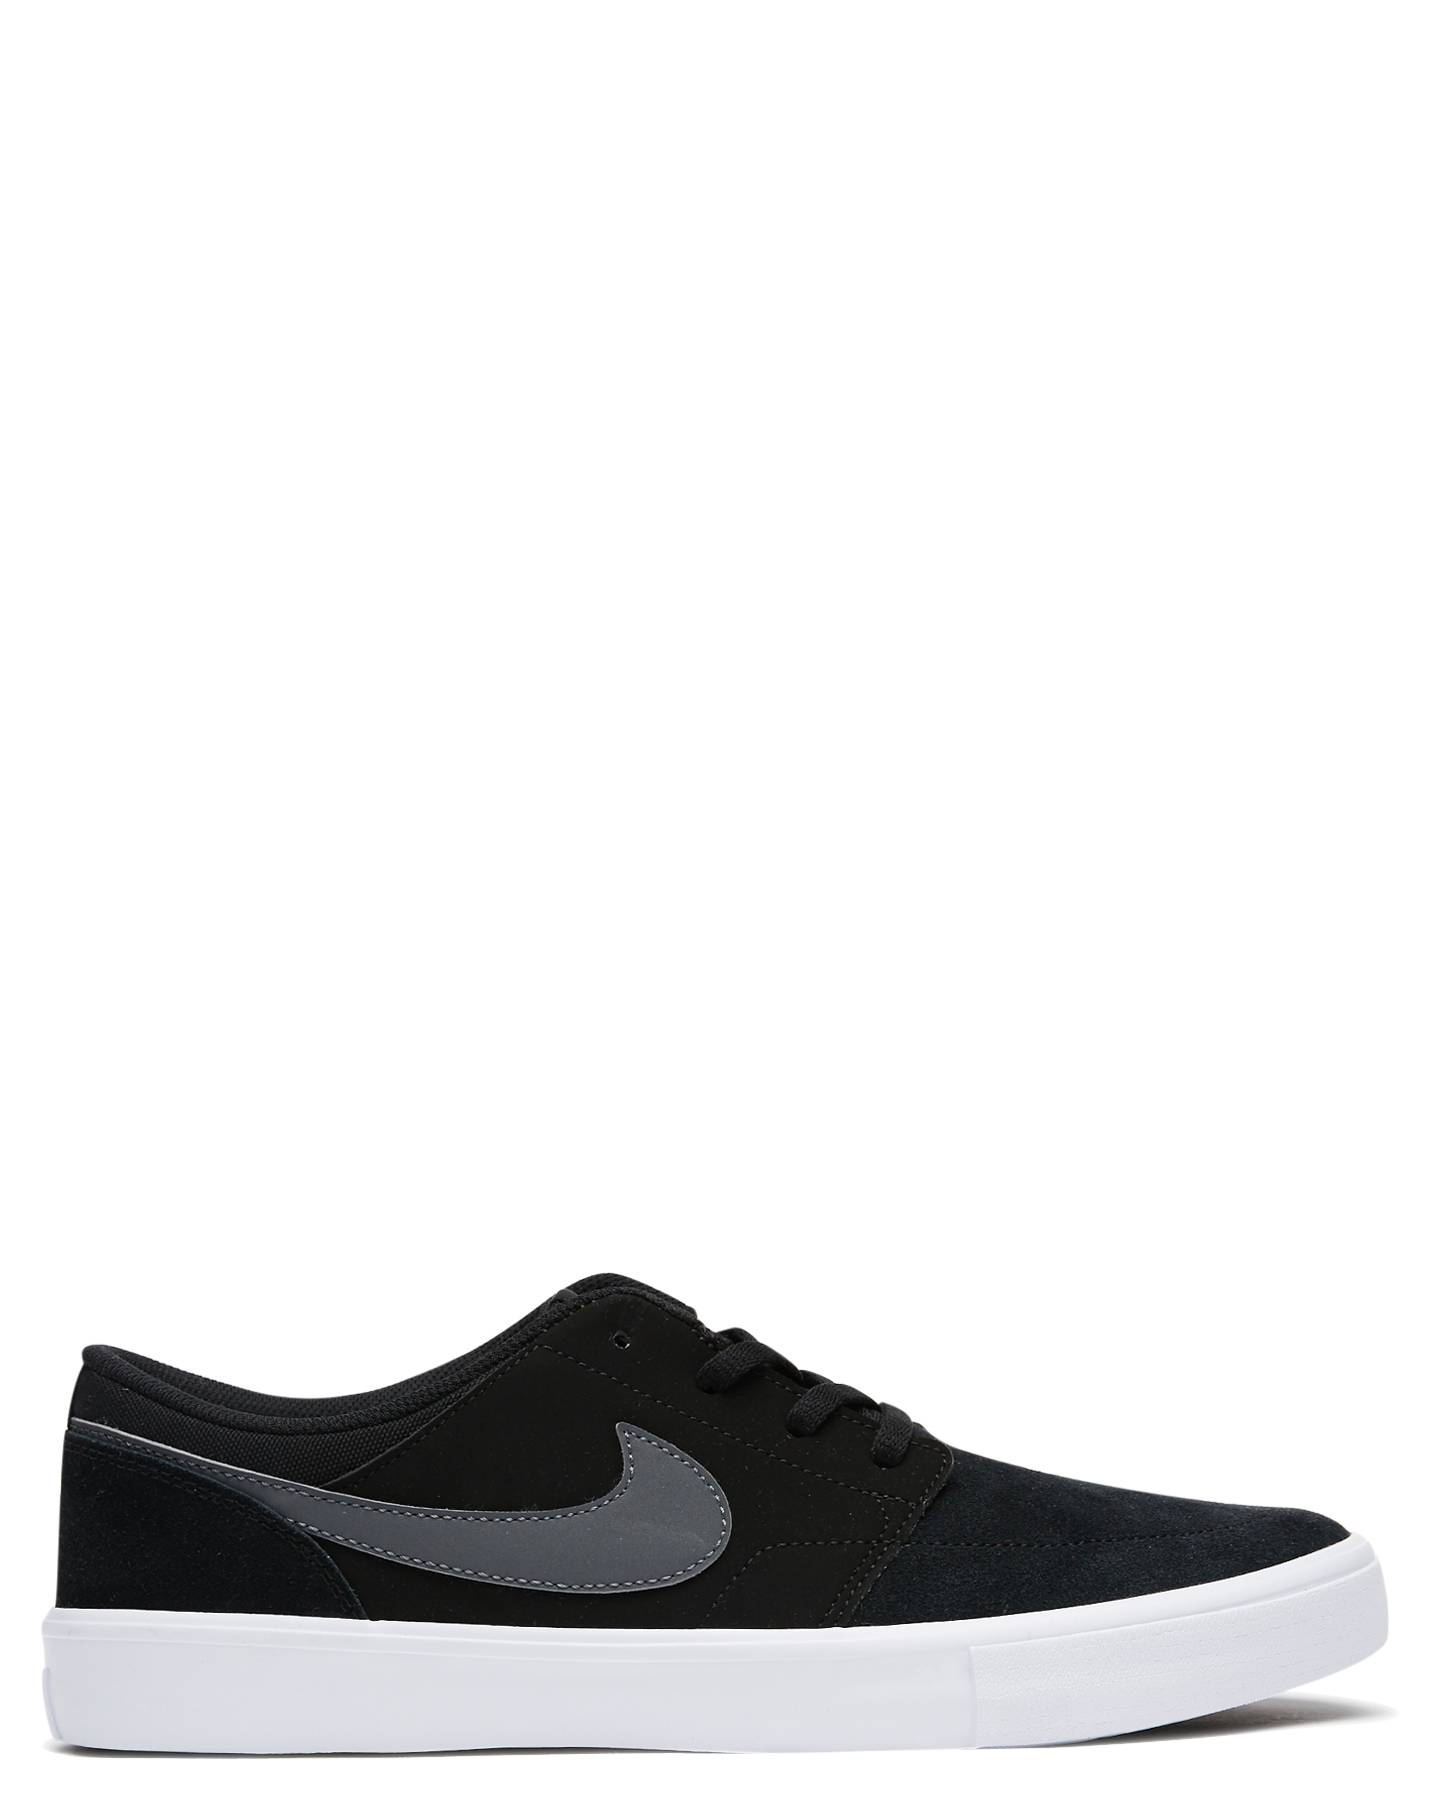 Nike Womens Sb Solarsoft Portmore Ii Shoe - Black Dk Grey White ... كمامات كوريه